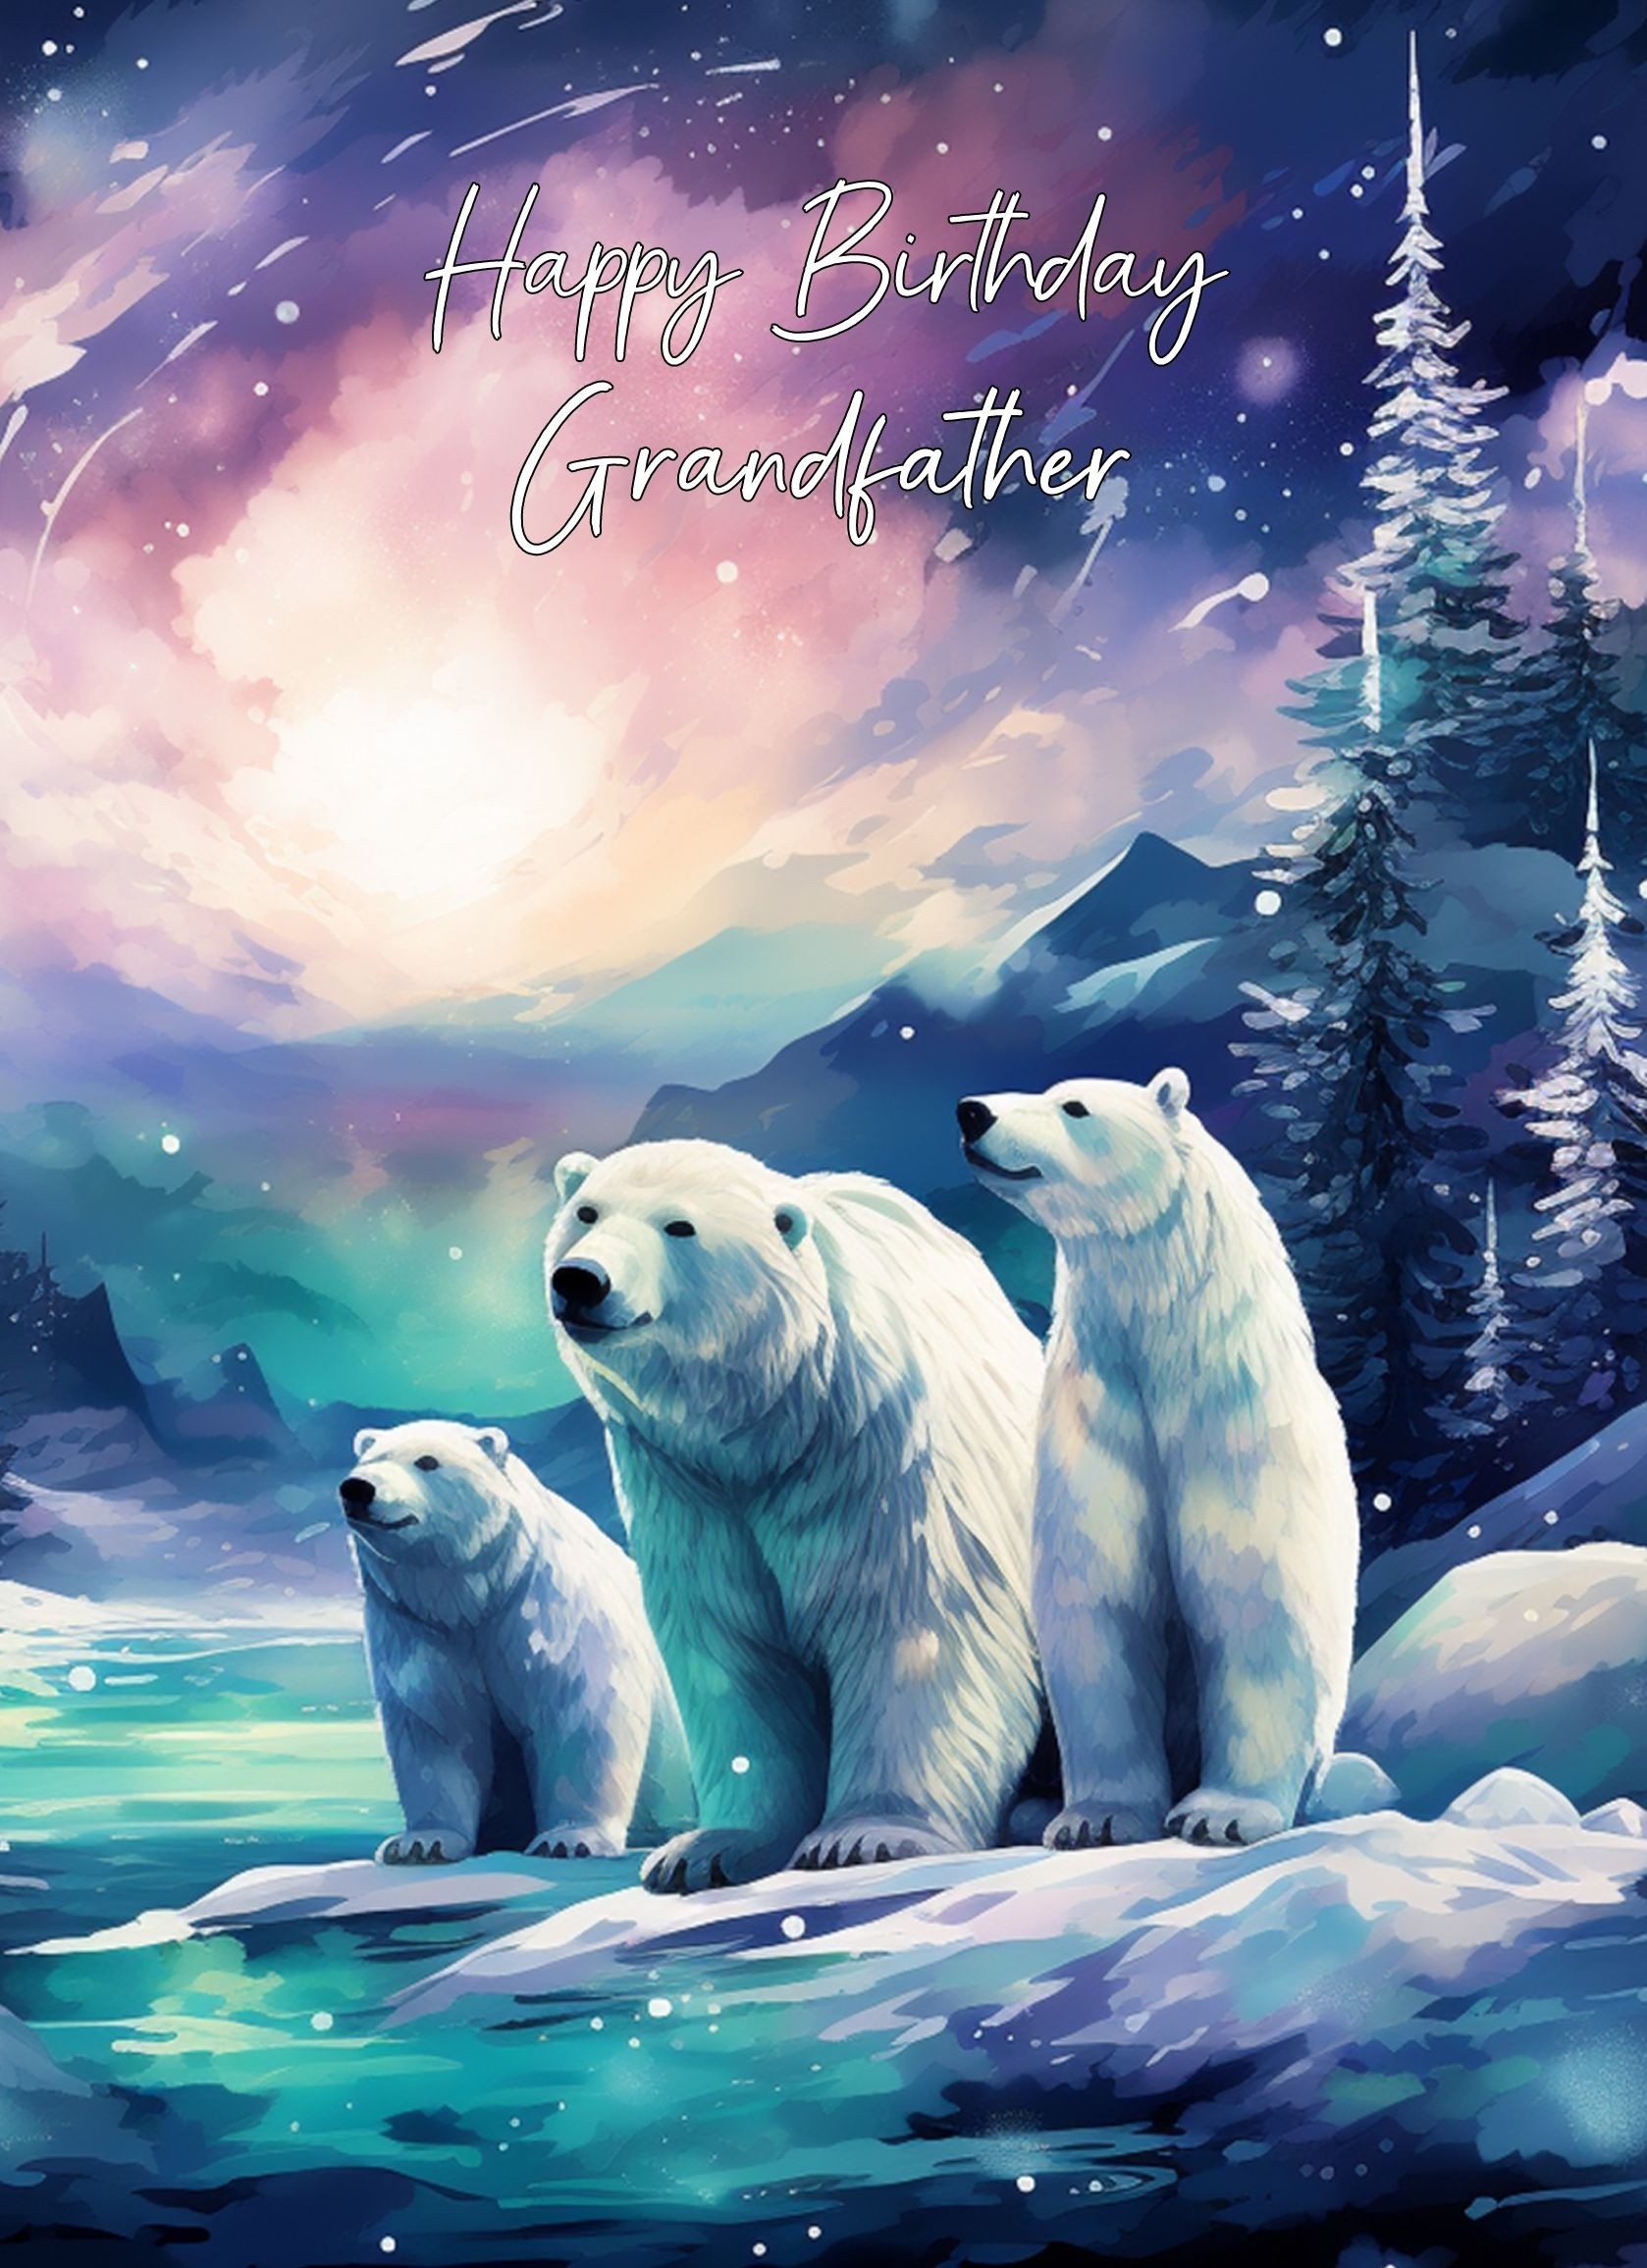 Polar Bear Art Birthday Card For Grandfather (Design 1)